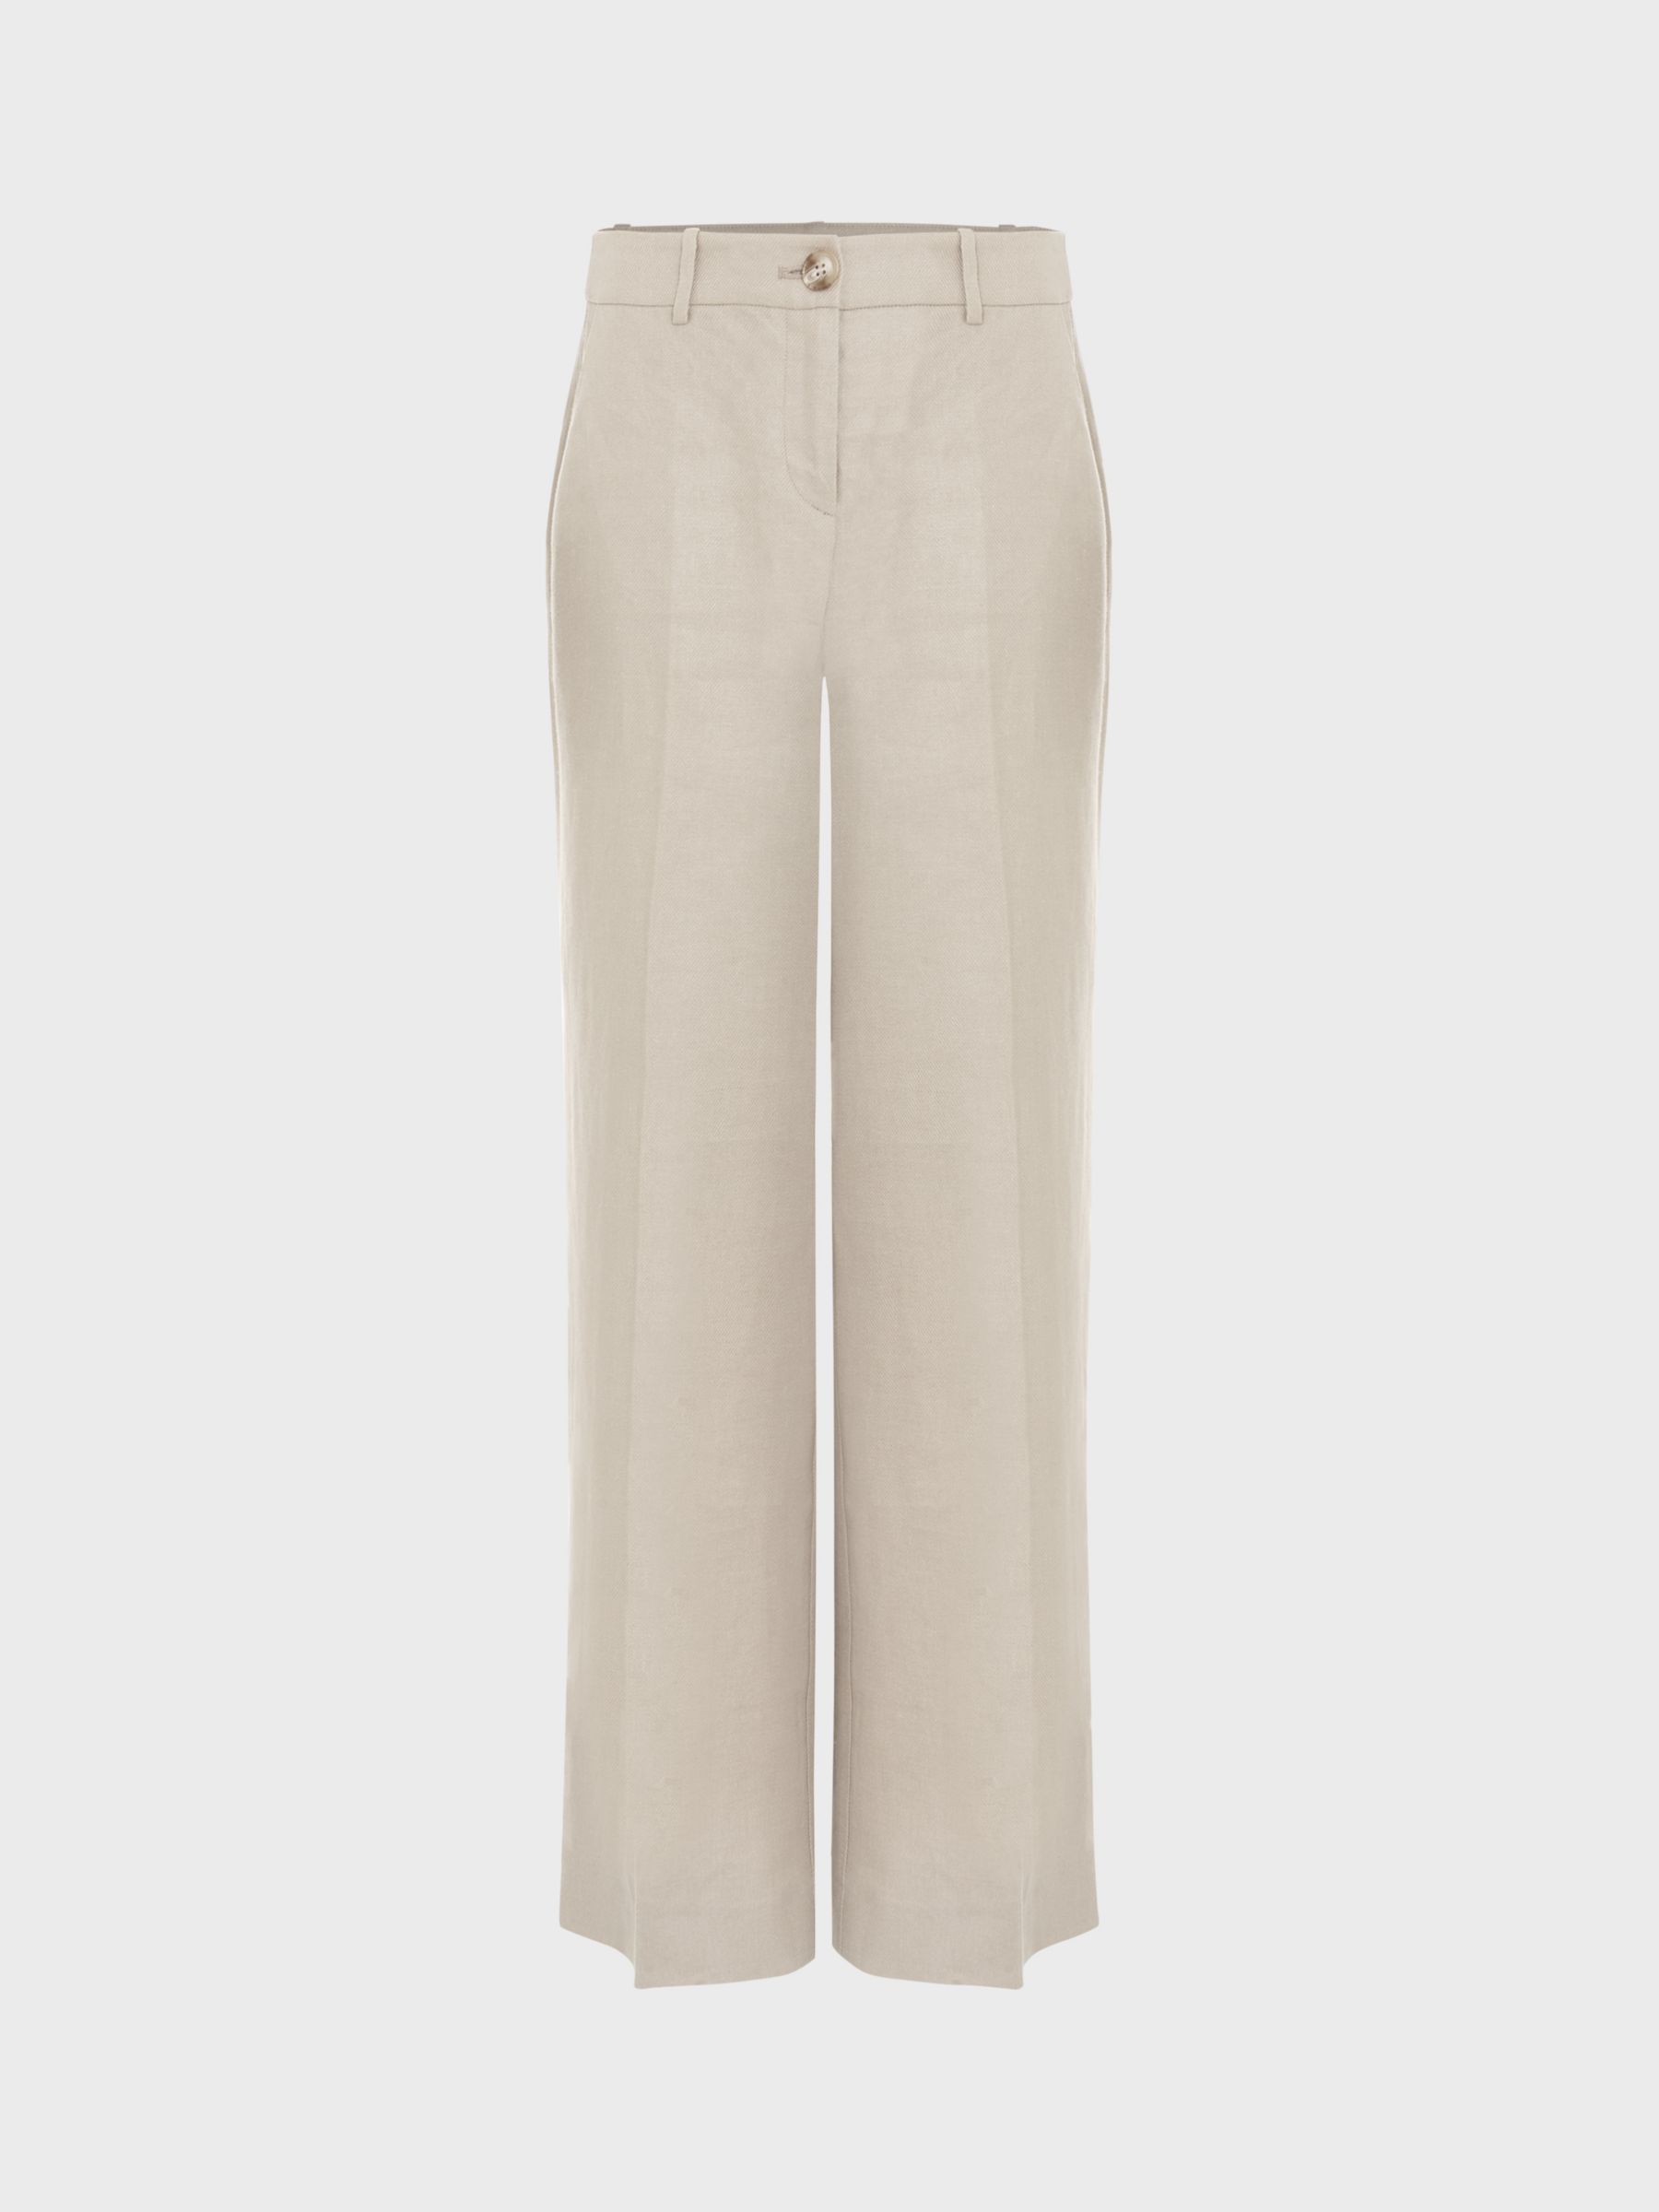 Hobbs Roberta Tailored Linen Trousers, Neutral, 12